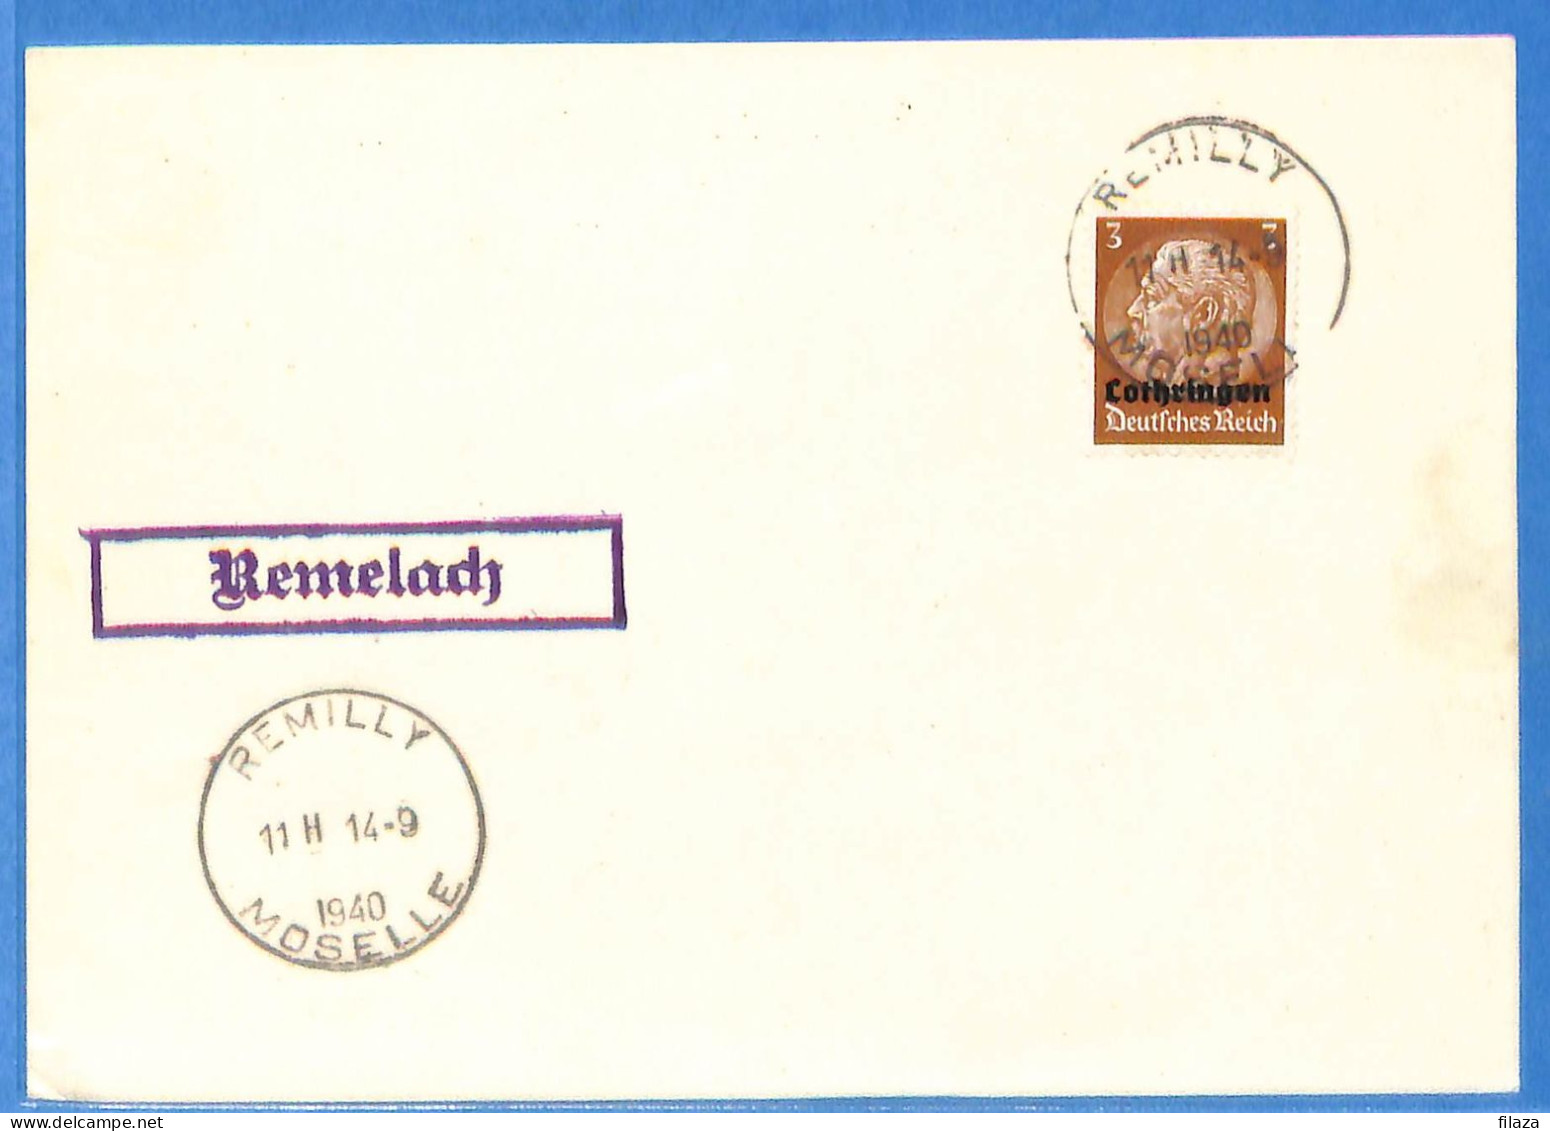 Allemagne Reich 1940 - Carte Postale De Remilly - G33188 - Lettres & Documents